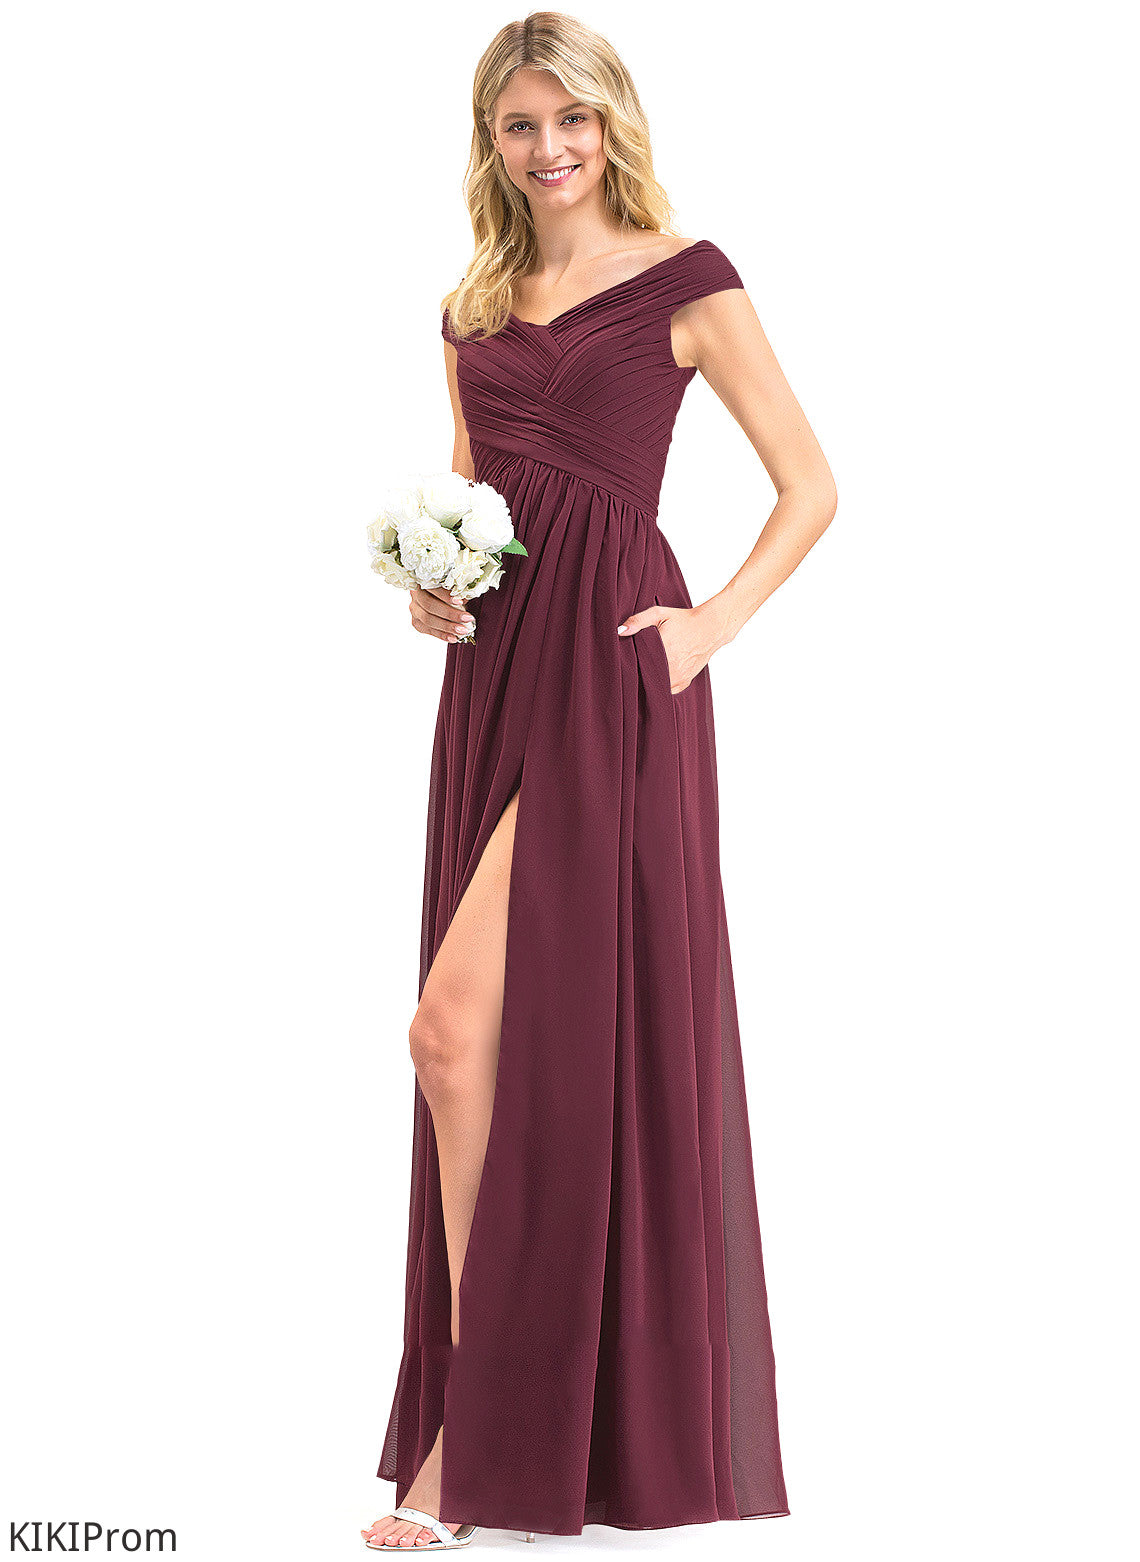 A-Line Silhouette Pockets Embellishment Floor-Length Length Off-the-Shoulder Ruffle SplitFront Fabric Neckline Abbey Bridesmaid Dresses